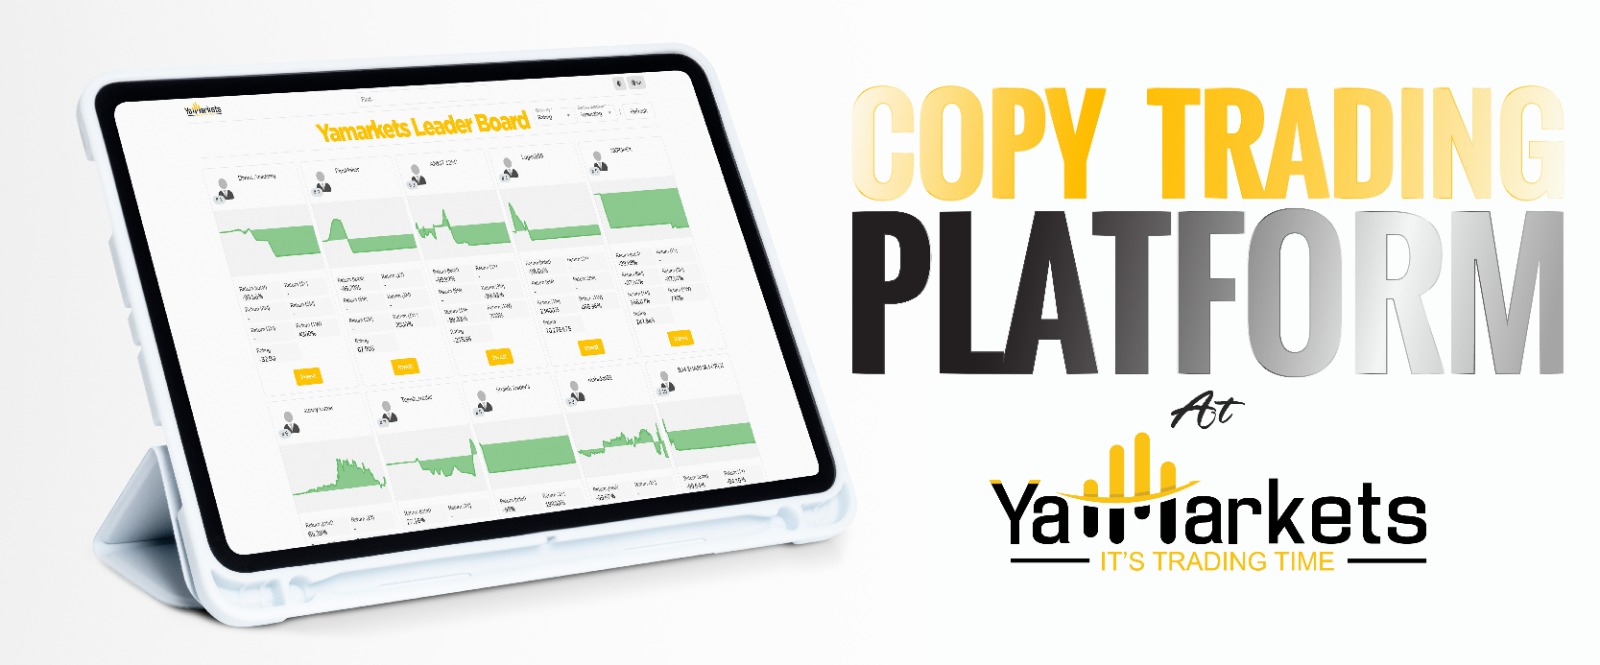 Copy Trading Platform at YaMarkets